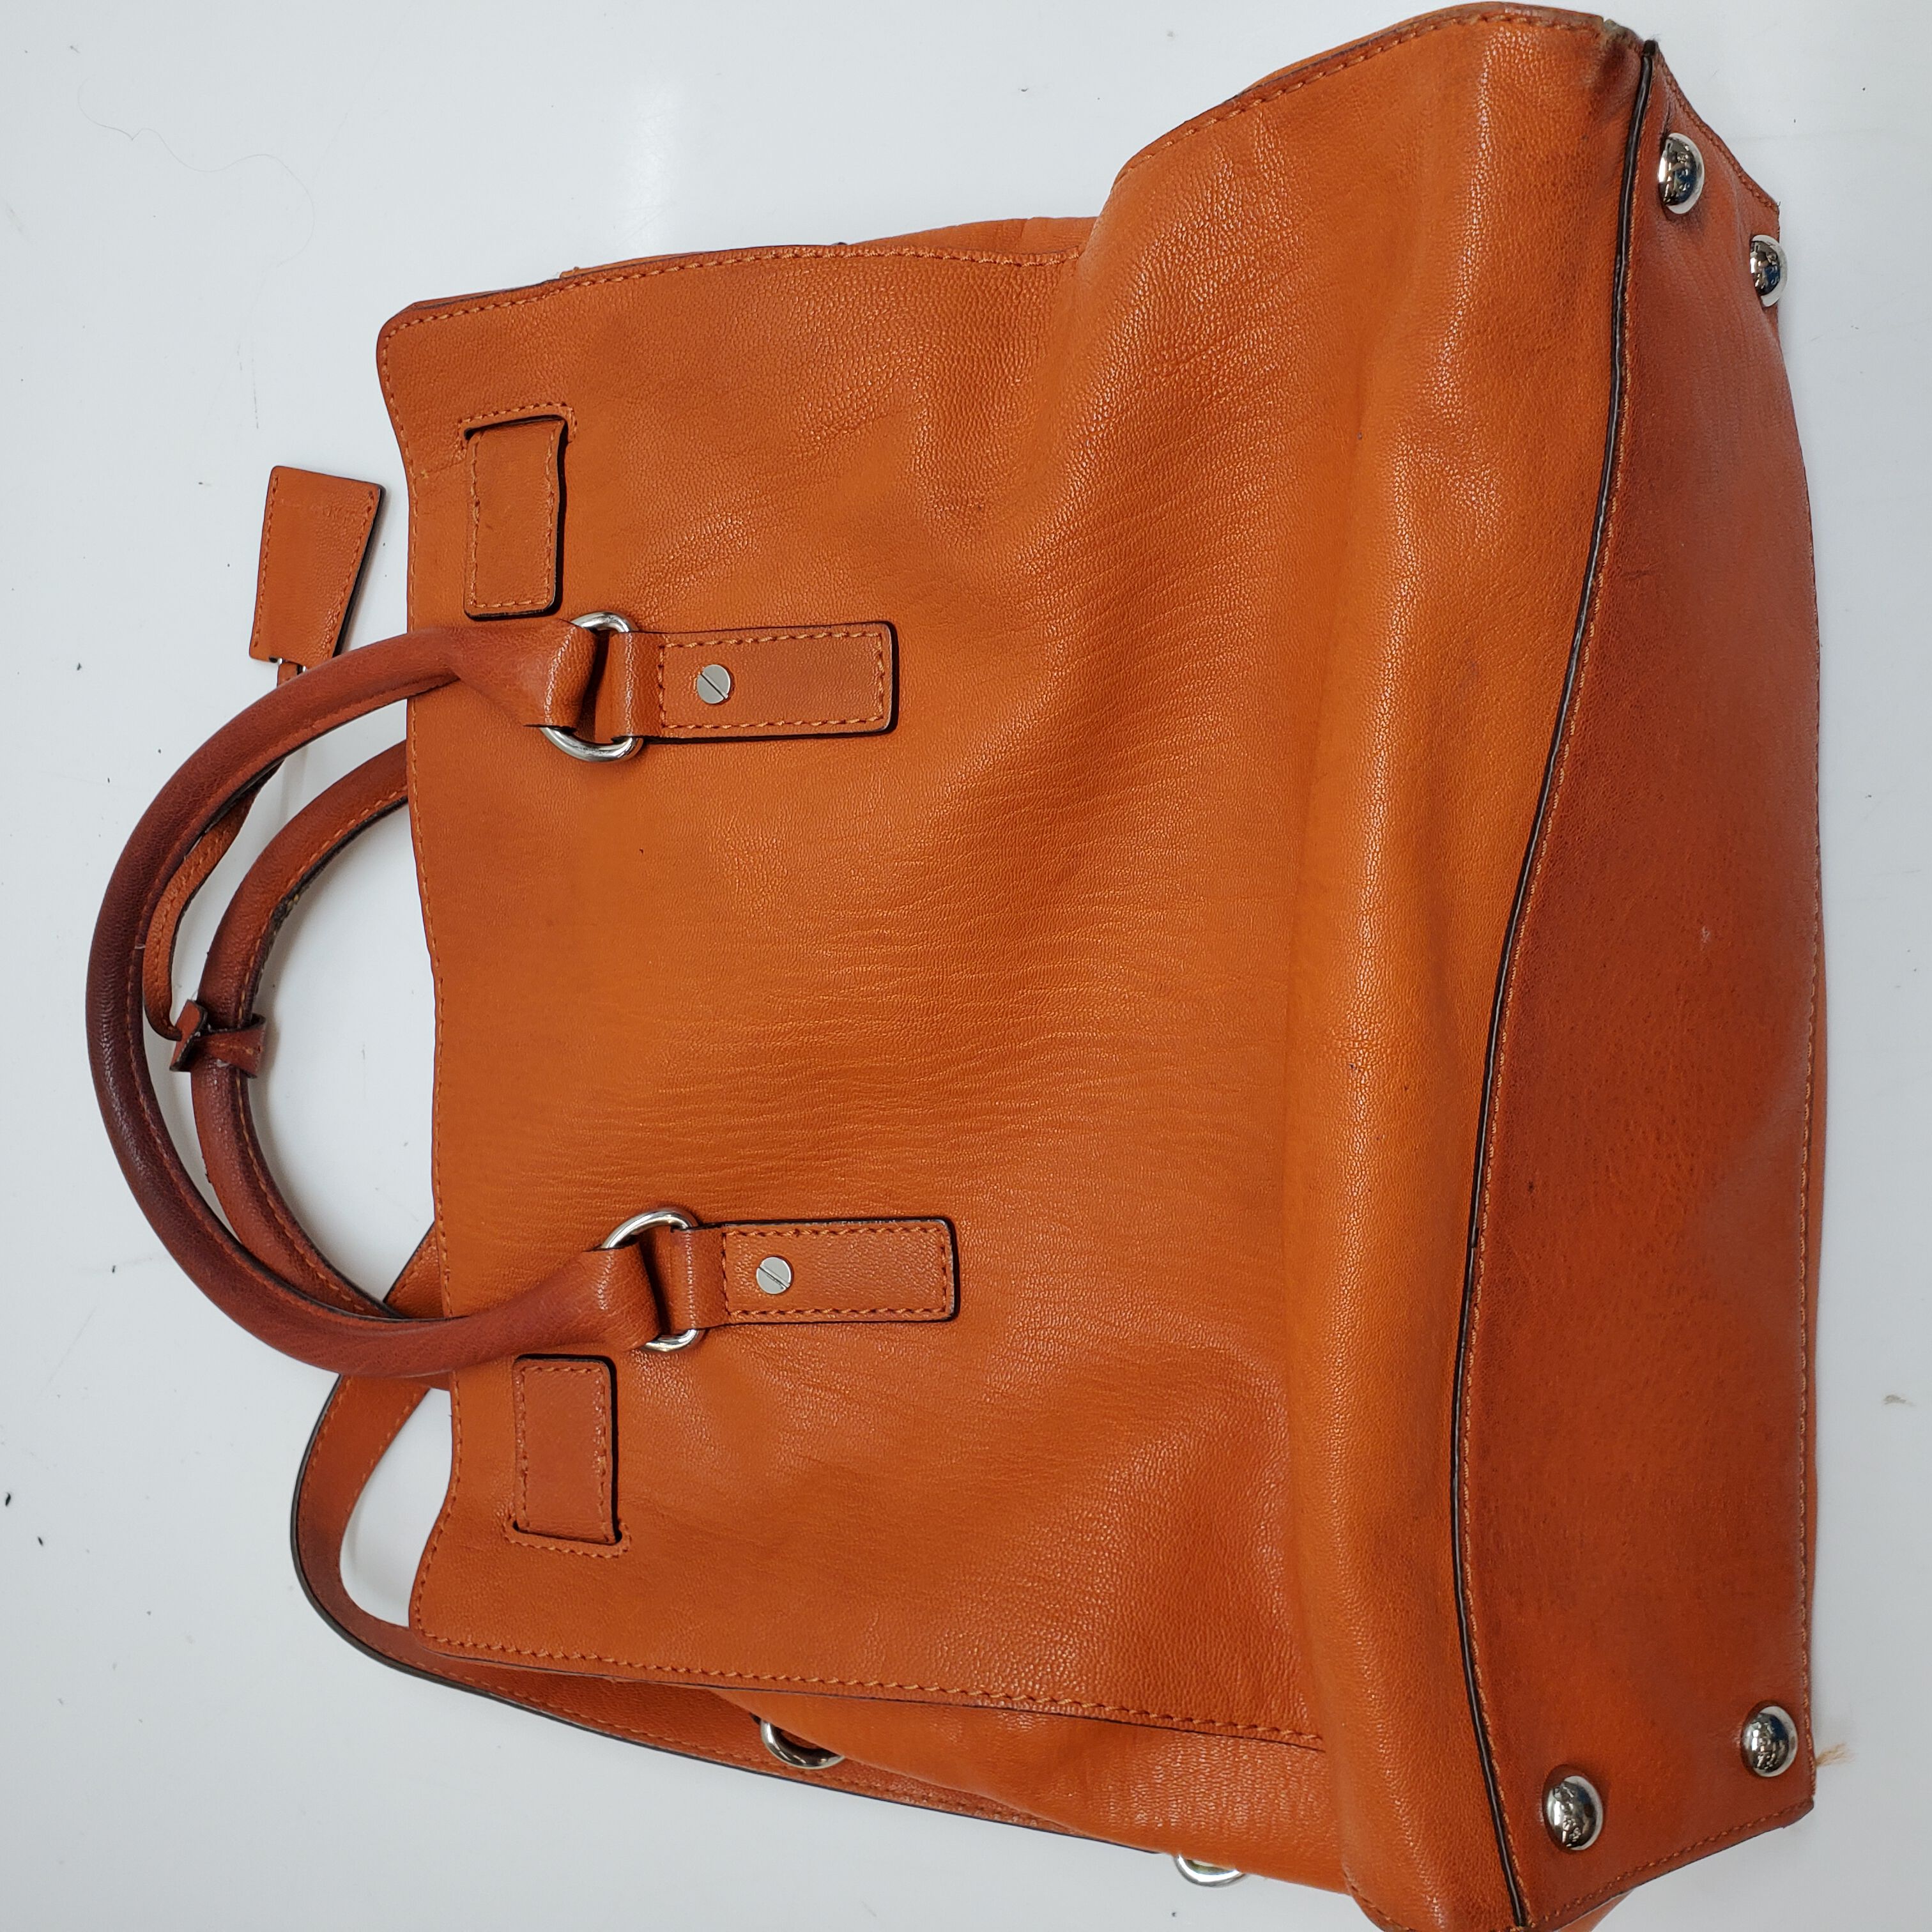 NWOT / Michael Kors Greenwich Small Saffiano Leather Crossbody Bag